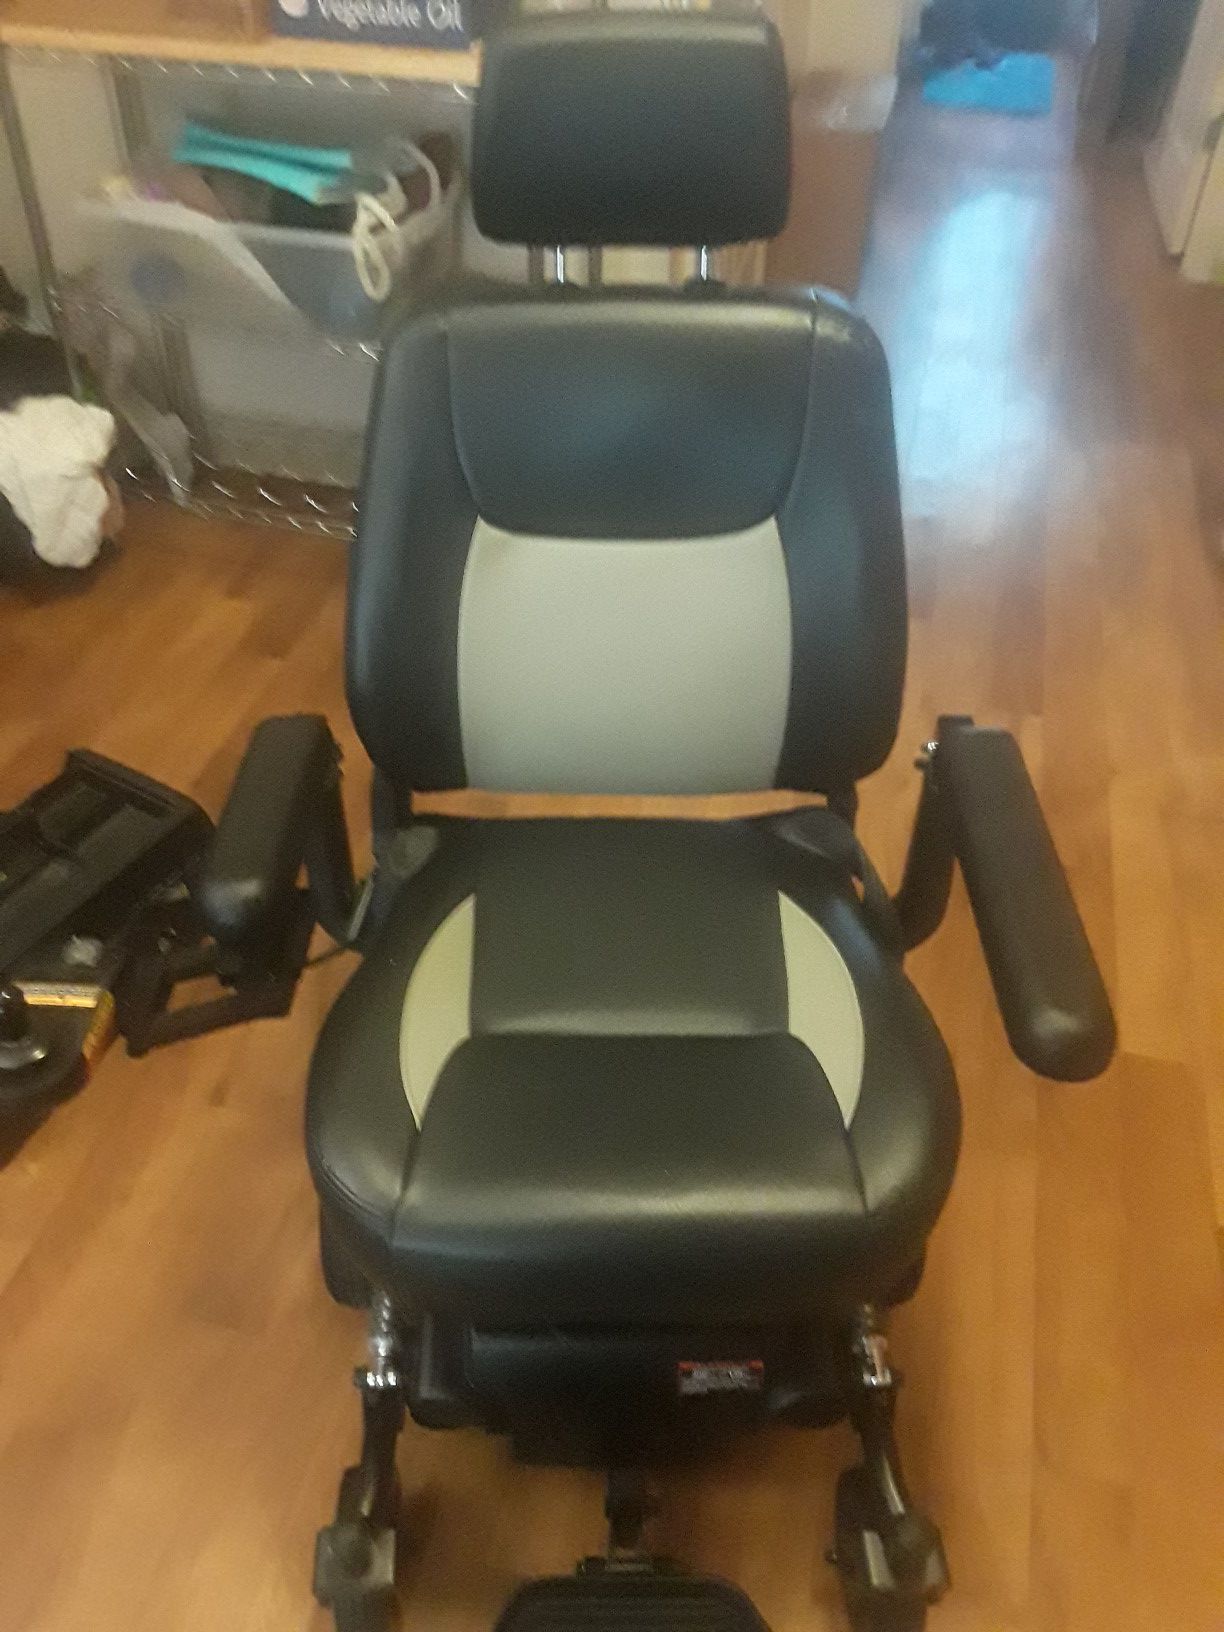 Brand new motorized wheel chair